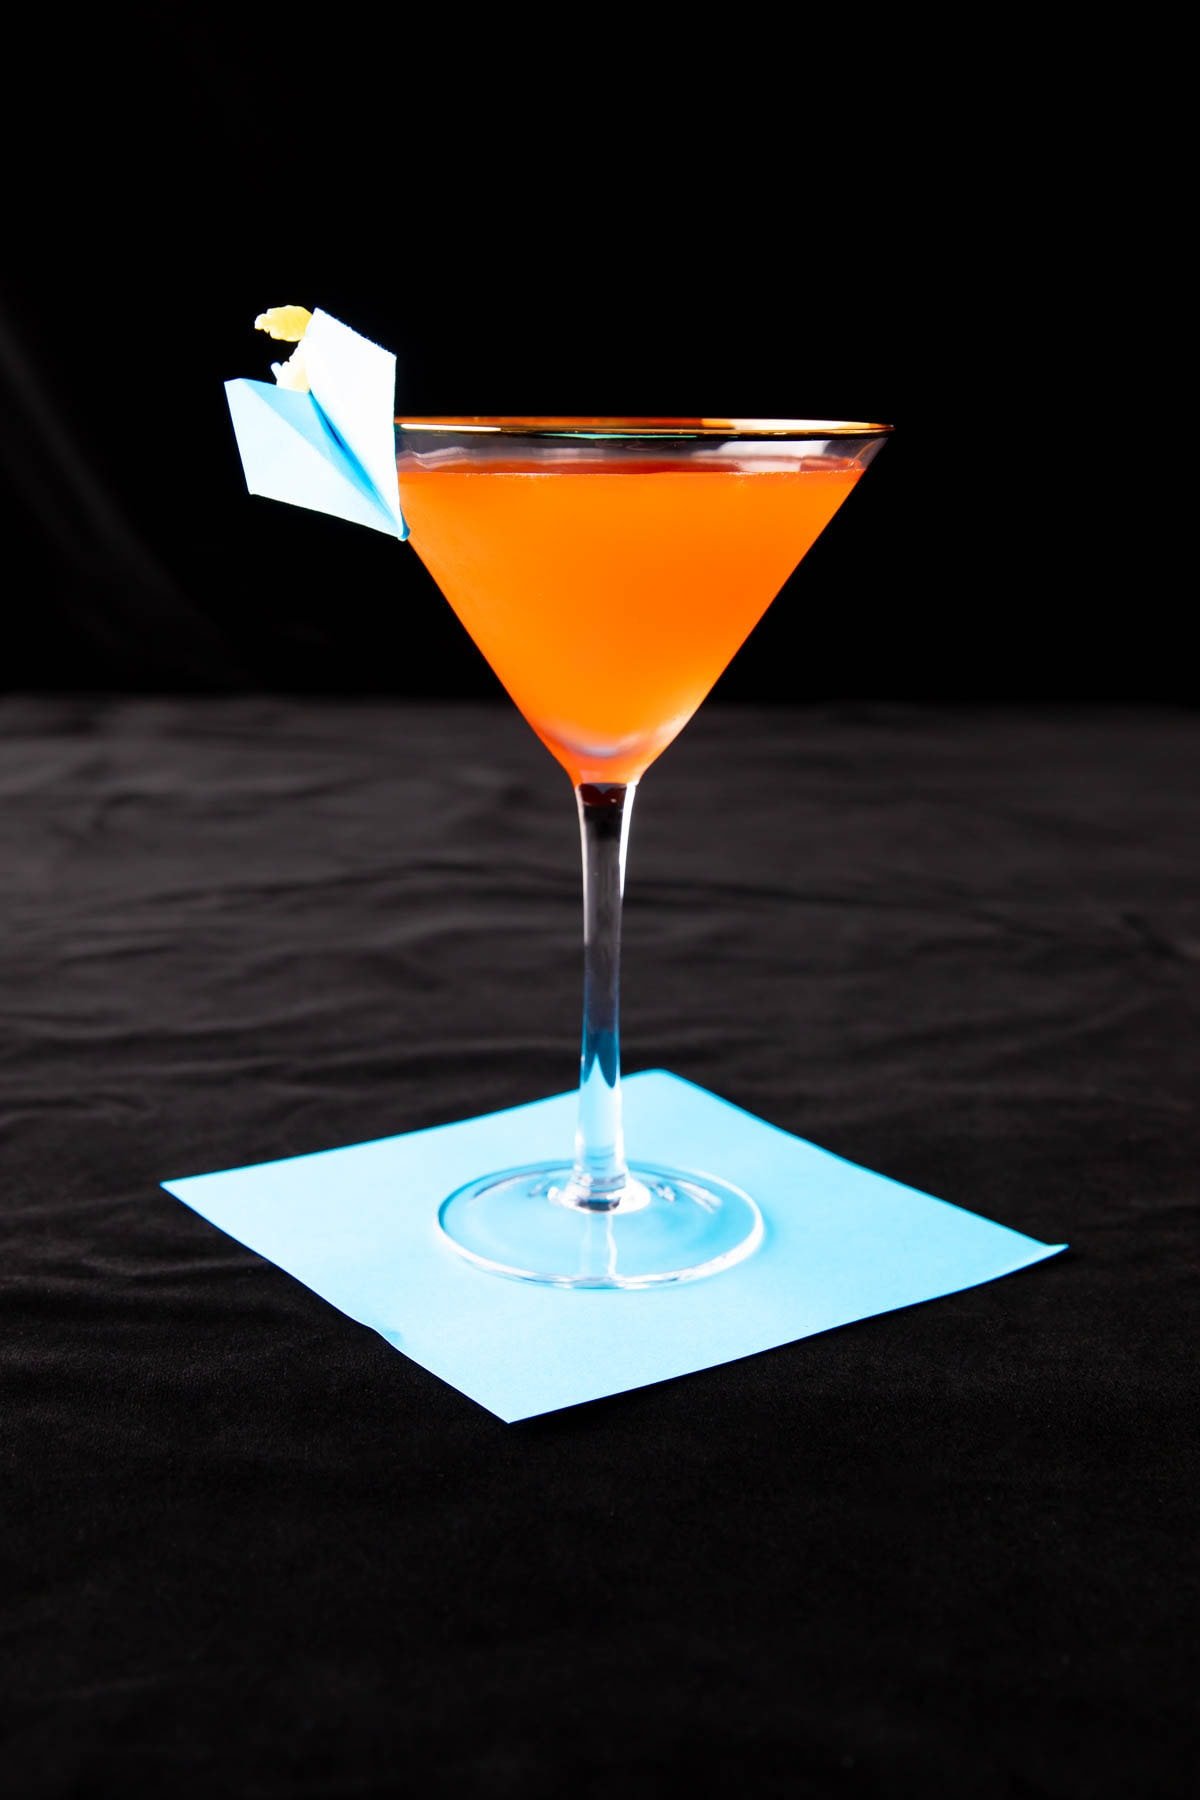 Paper Plane Cocktail served against a black backdrop